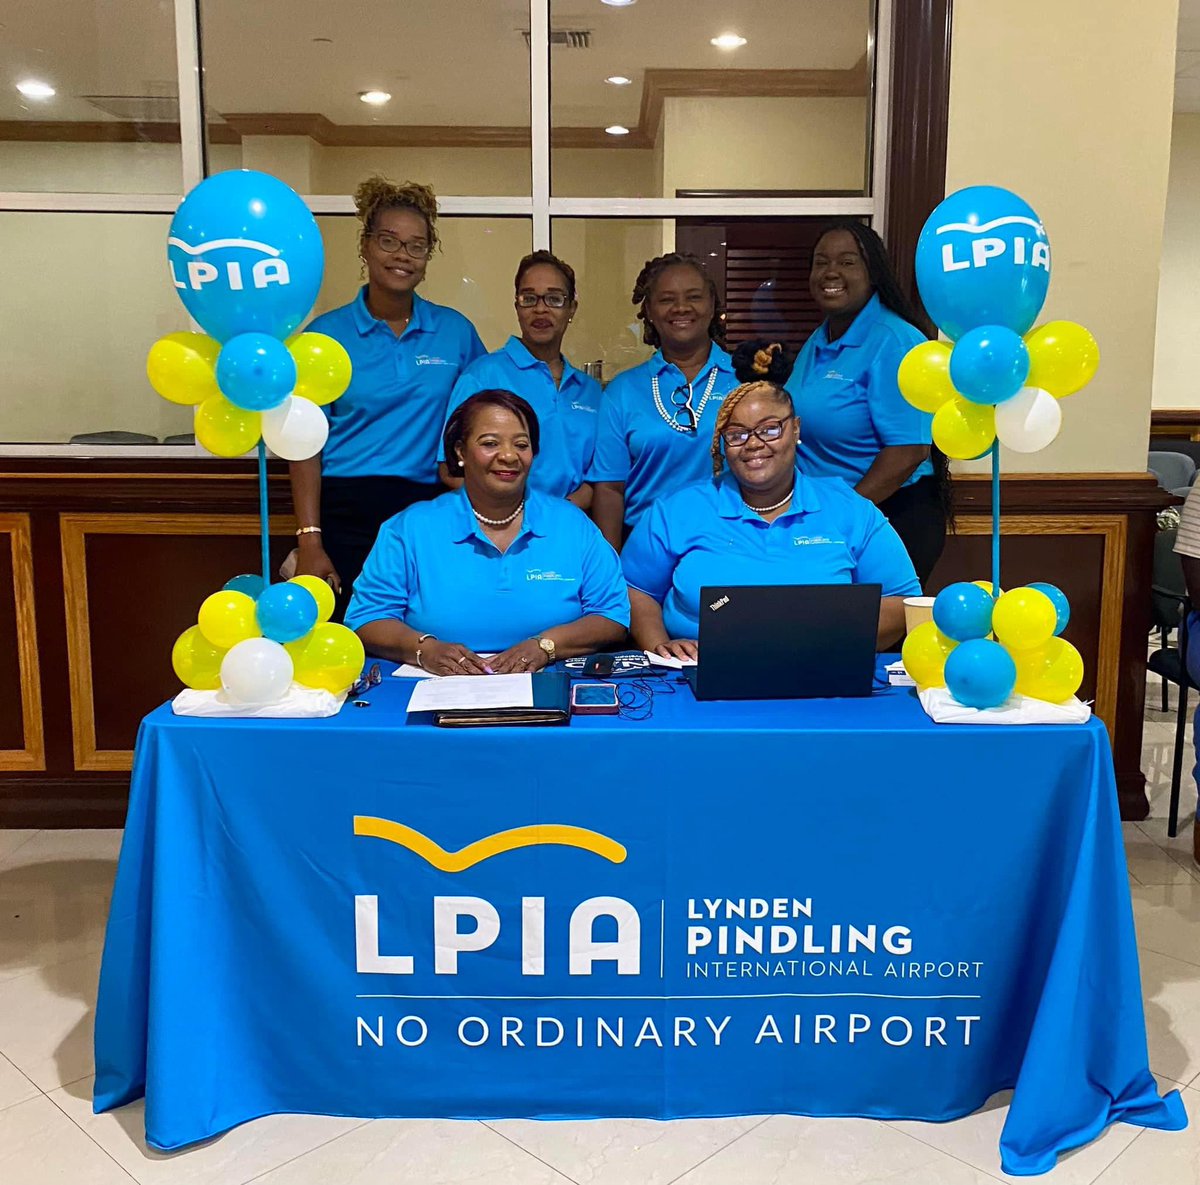 Lynden Pindling International Airport - LPIA team is onsite and ready to meet you at today’s job fair ! 

#DOLBahamas #LPIA #NTA #JobFair